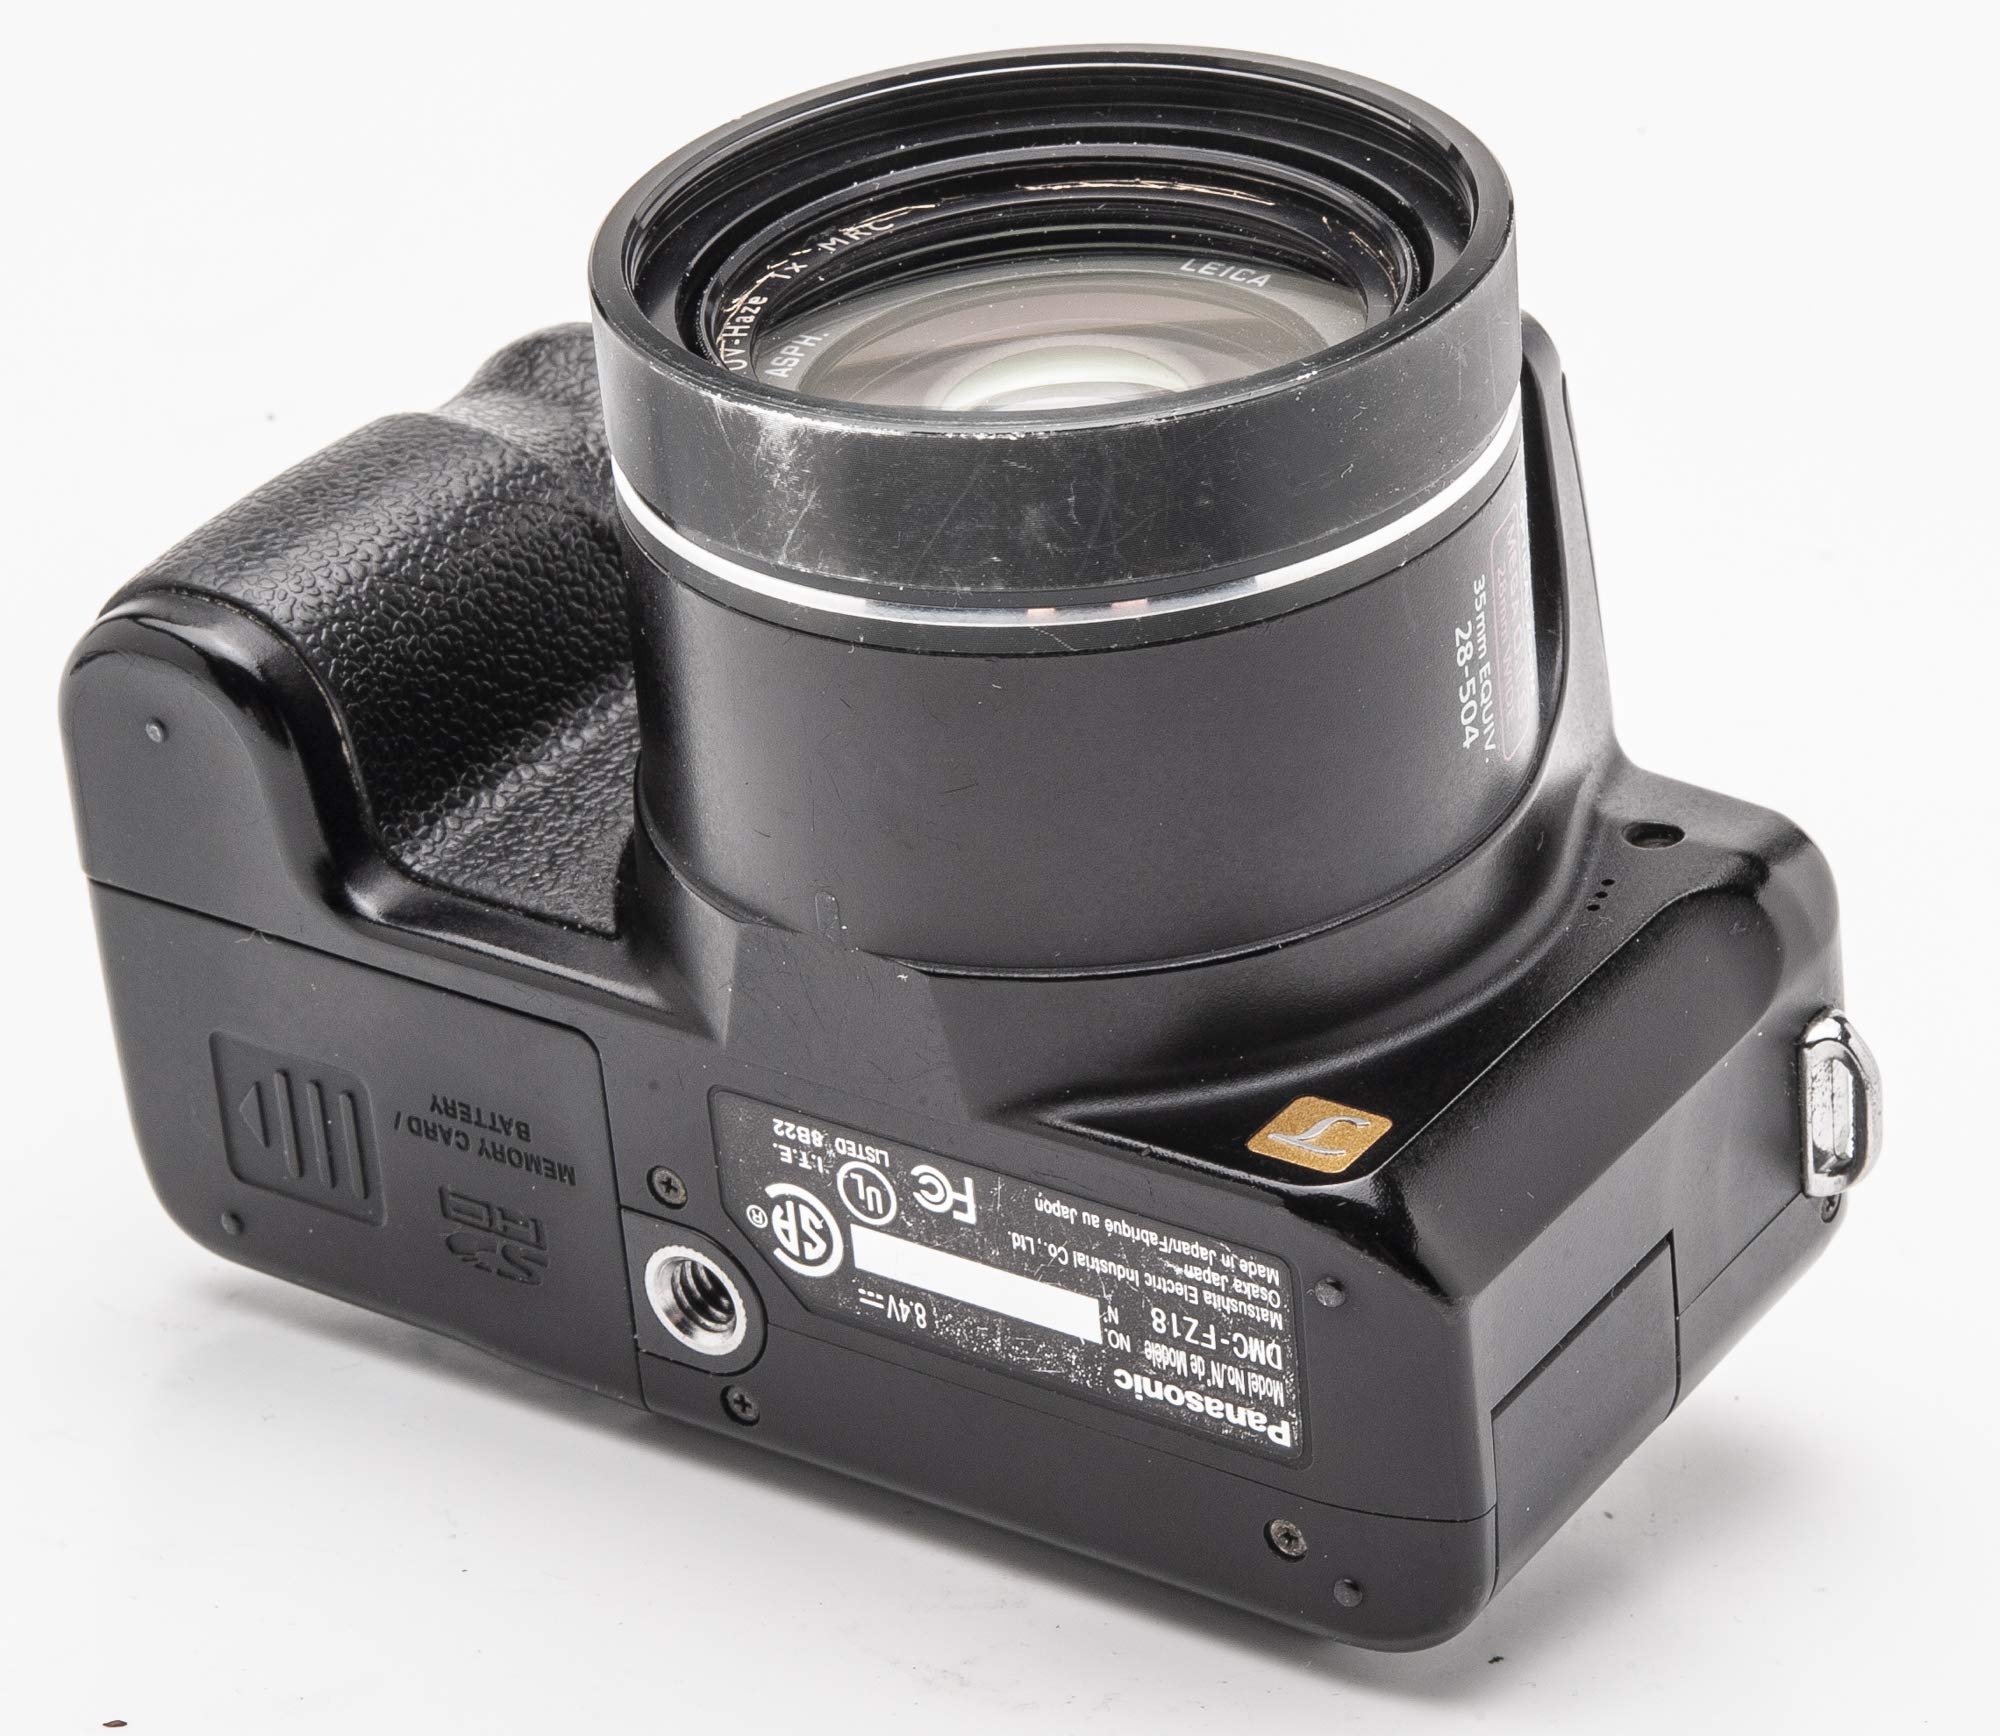 Panasonic Lumix DMC-FZ18K 8.1MP Digital Camera with 18x Wide Angle MEGA Optical Image Stabilized Zoom (Black)